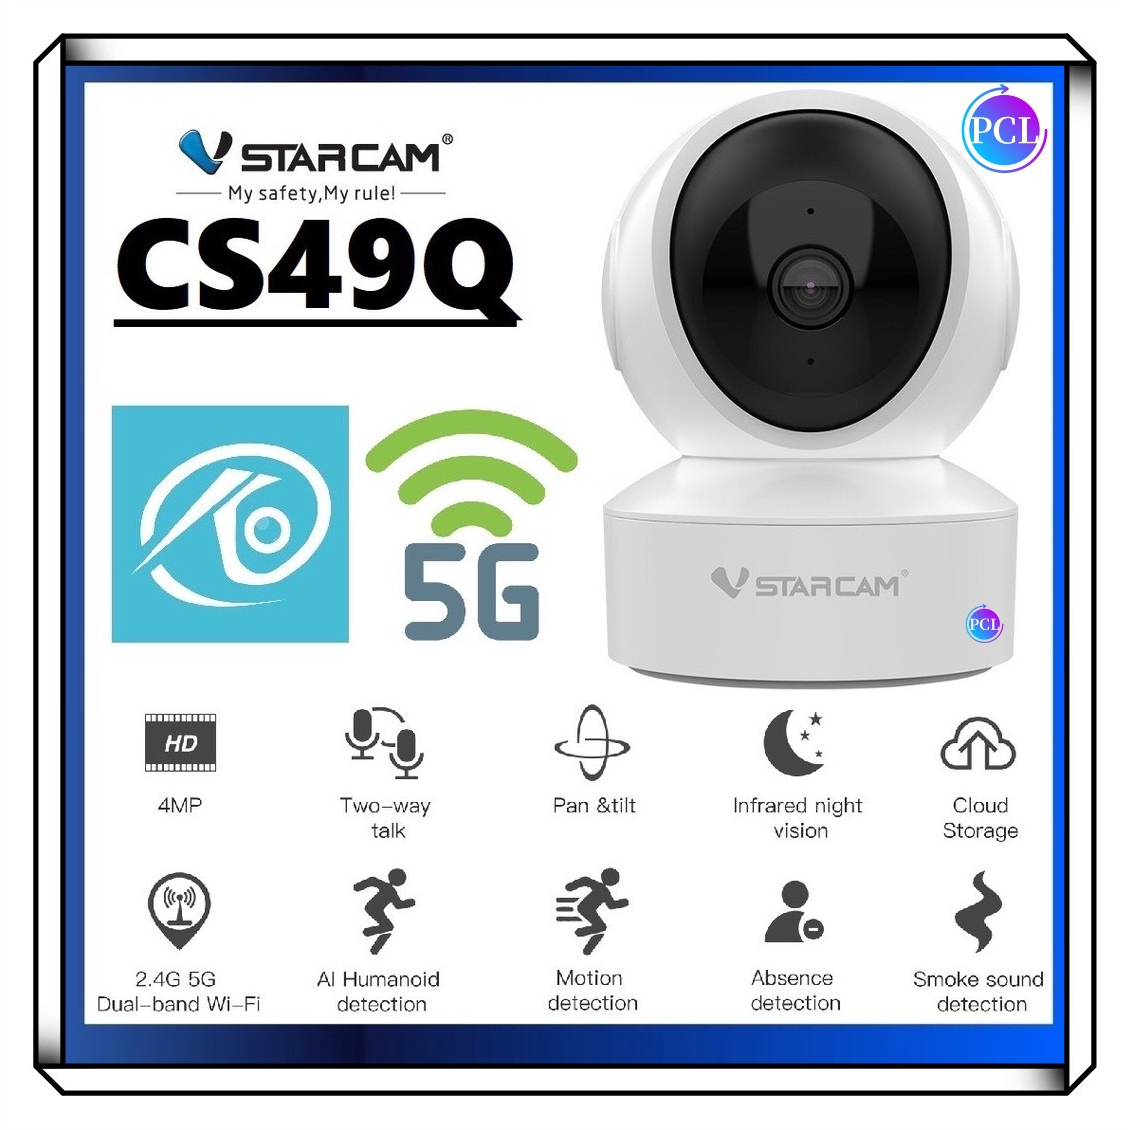 Vstarcam IP Camera รุ่น CS49Q ความละเอียดกล้อง4.0MP มีระบบ AI+ รองรับ WIFI 5G สัญญาณเตือนลูกค้าสามารถเลือกขนาดเมมโมรี่การ์ดได้